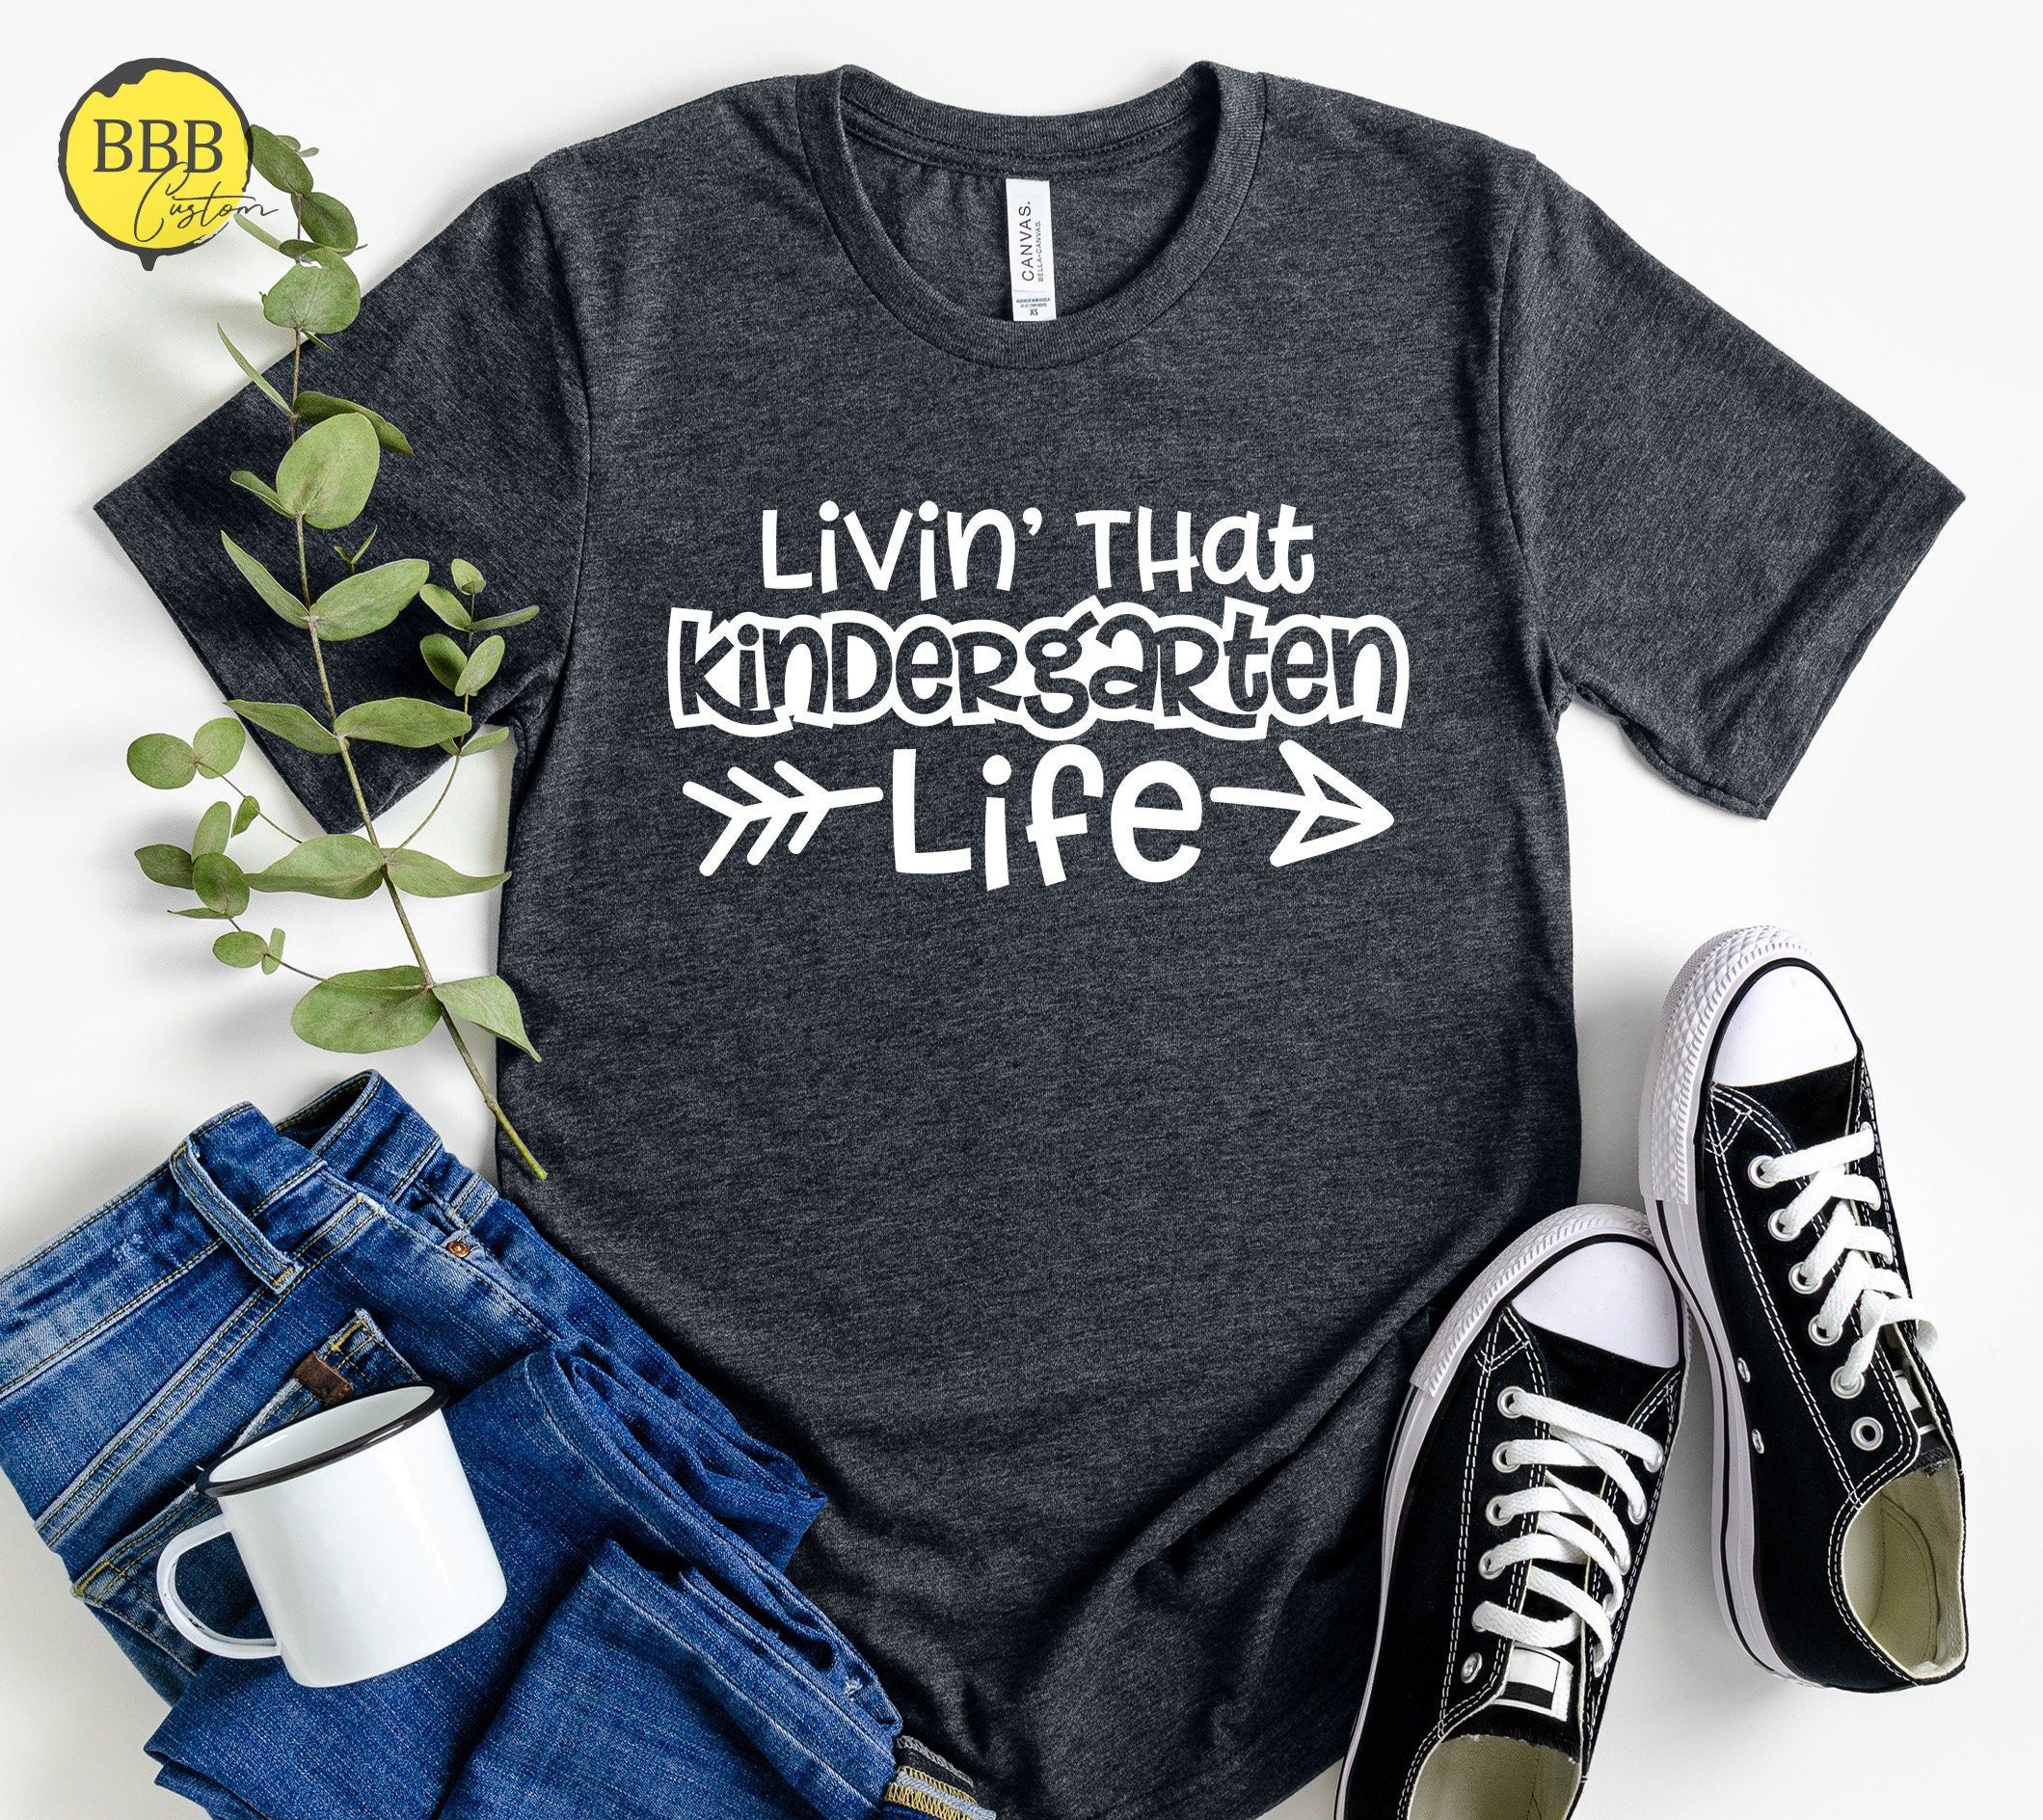 Livin' That Kindergarten Life, Living that Kindergarten Life, Kindergarten Teacher